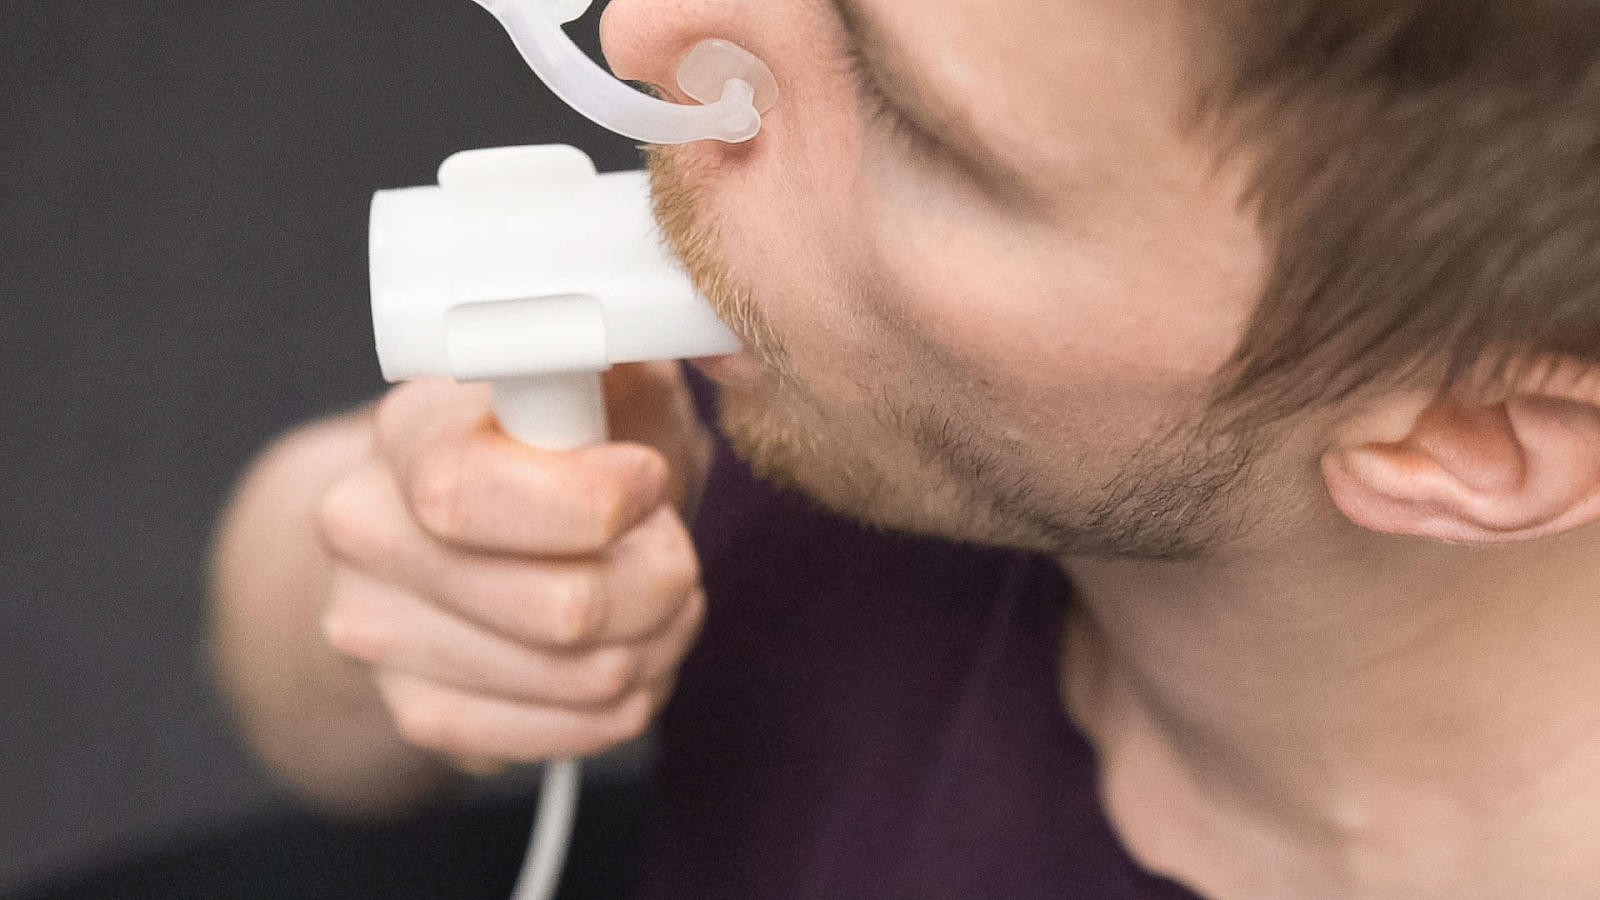 Male patient undergoes spirometry test